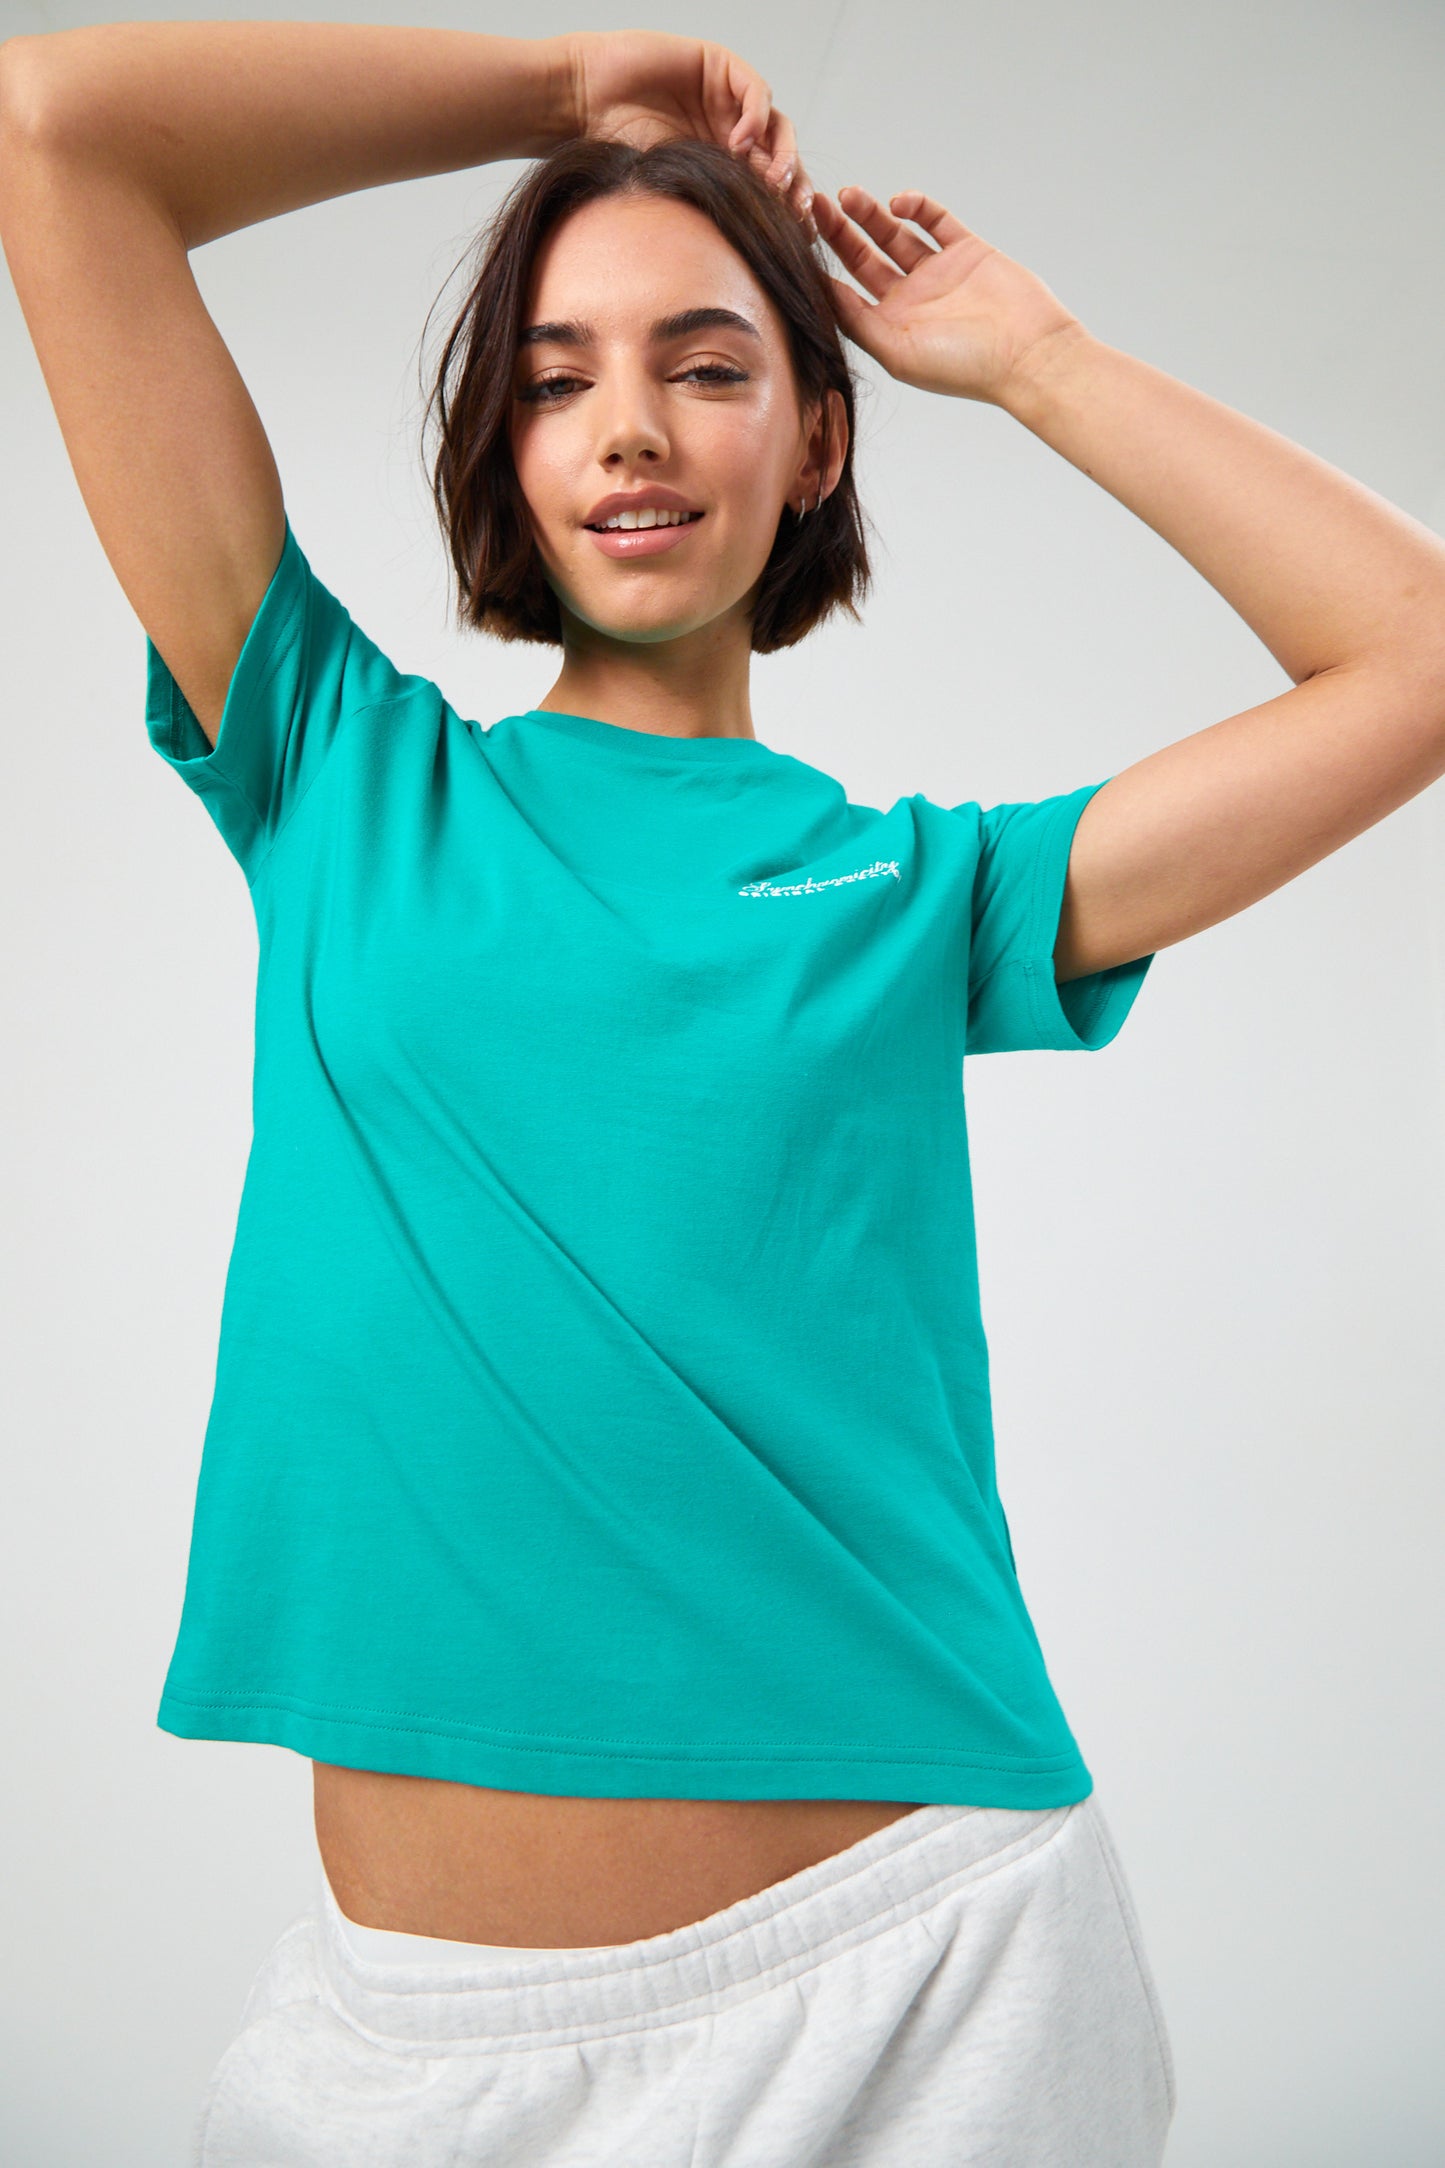 Synchronicity T-shirt - Tennis Green